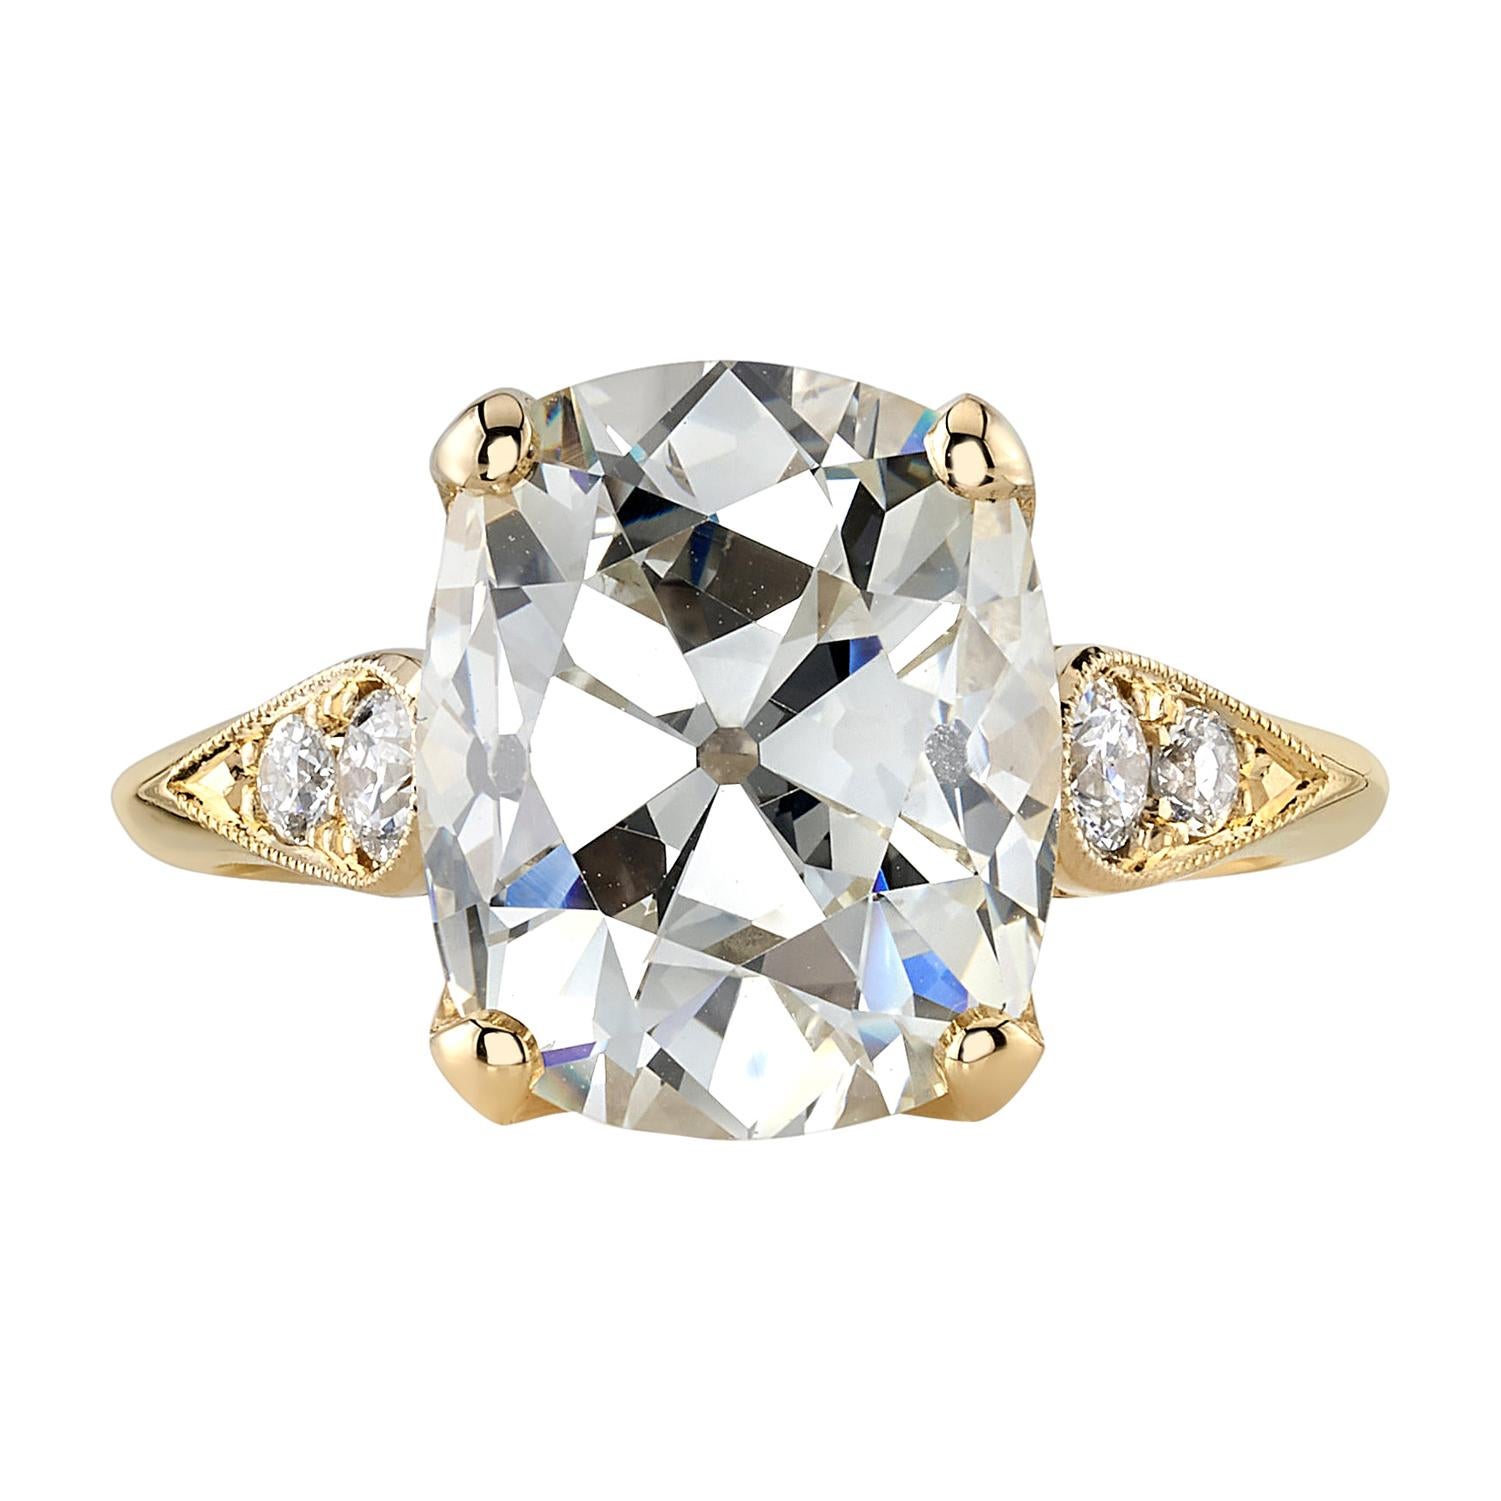 Handcrafted Amanda Cushion Cut Diamond Ring by Single Stone